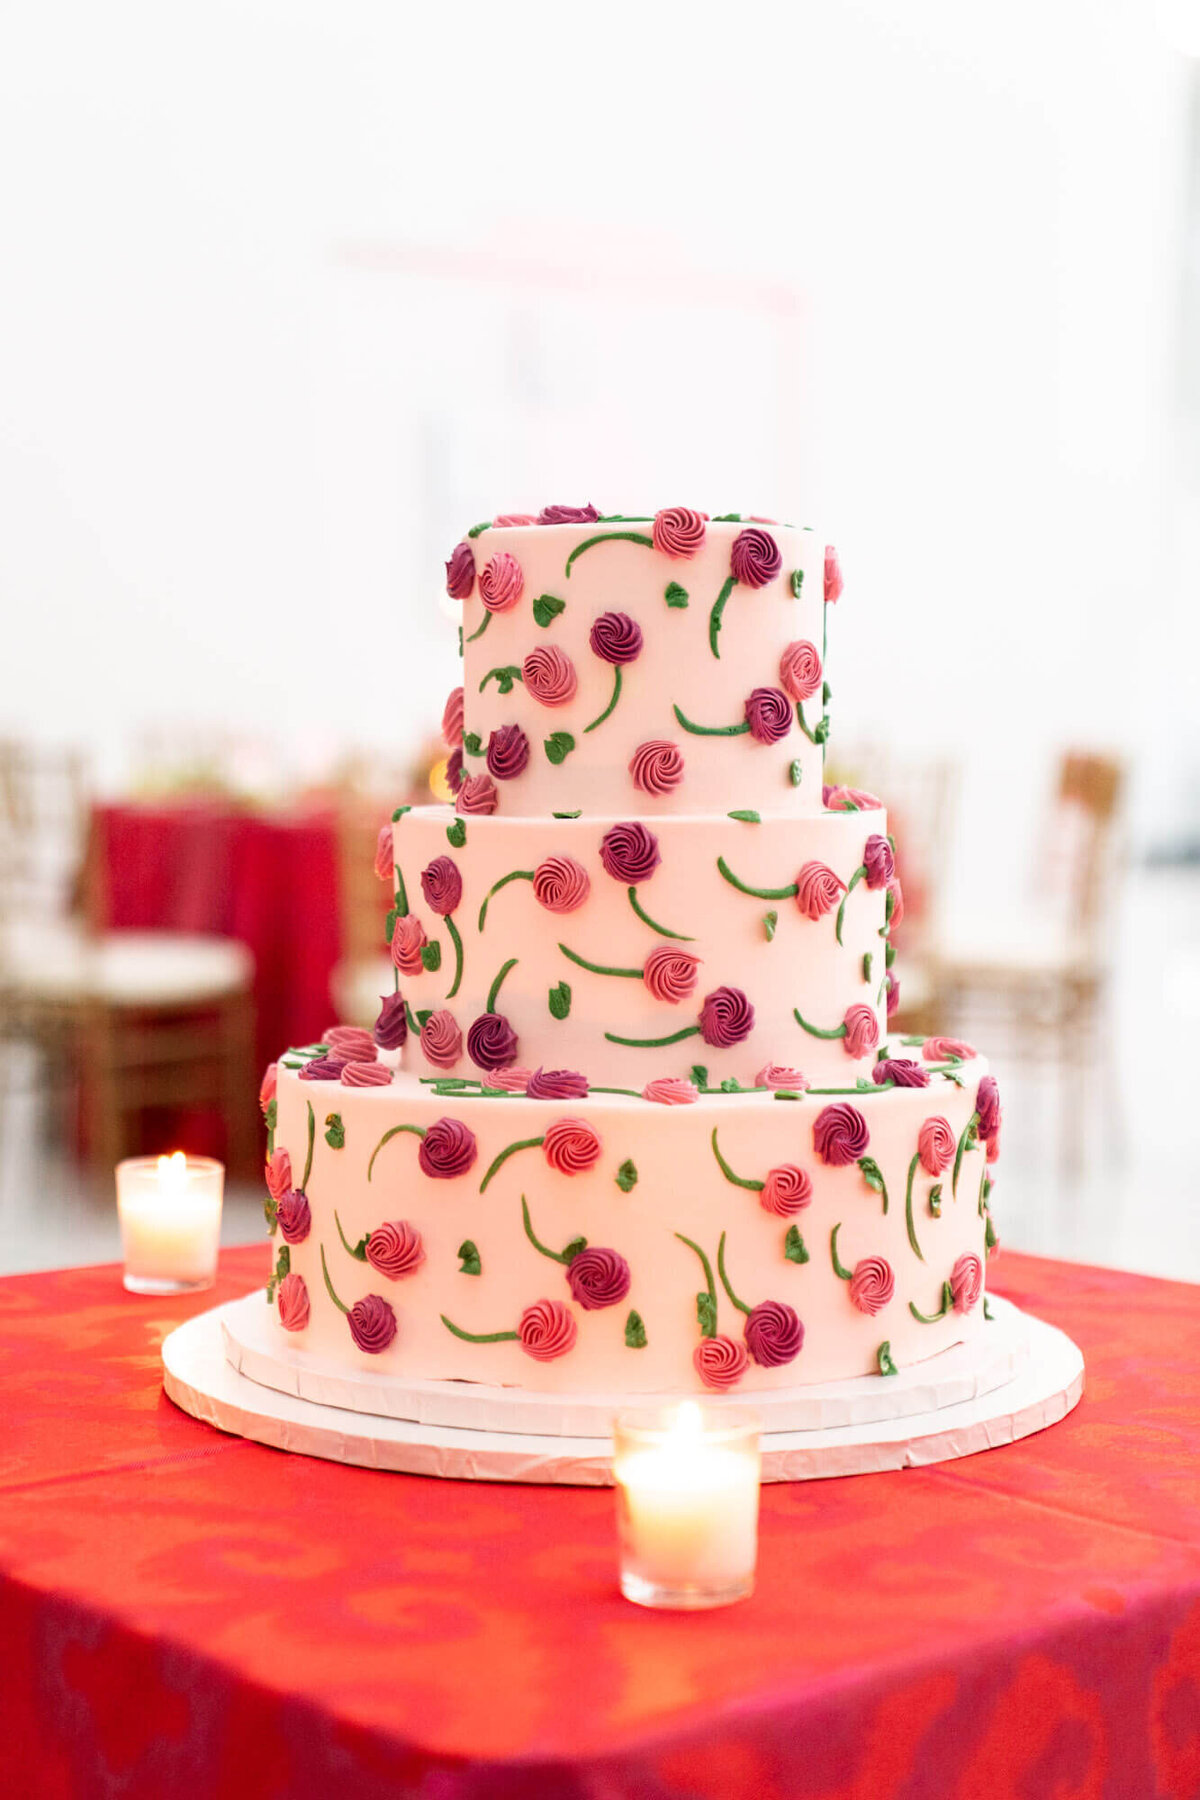 milwaukee-art-museum-wedding-cake-floral-flowers-bright